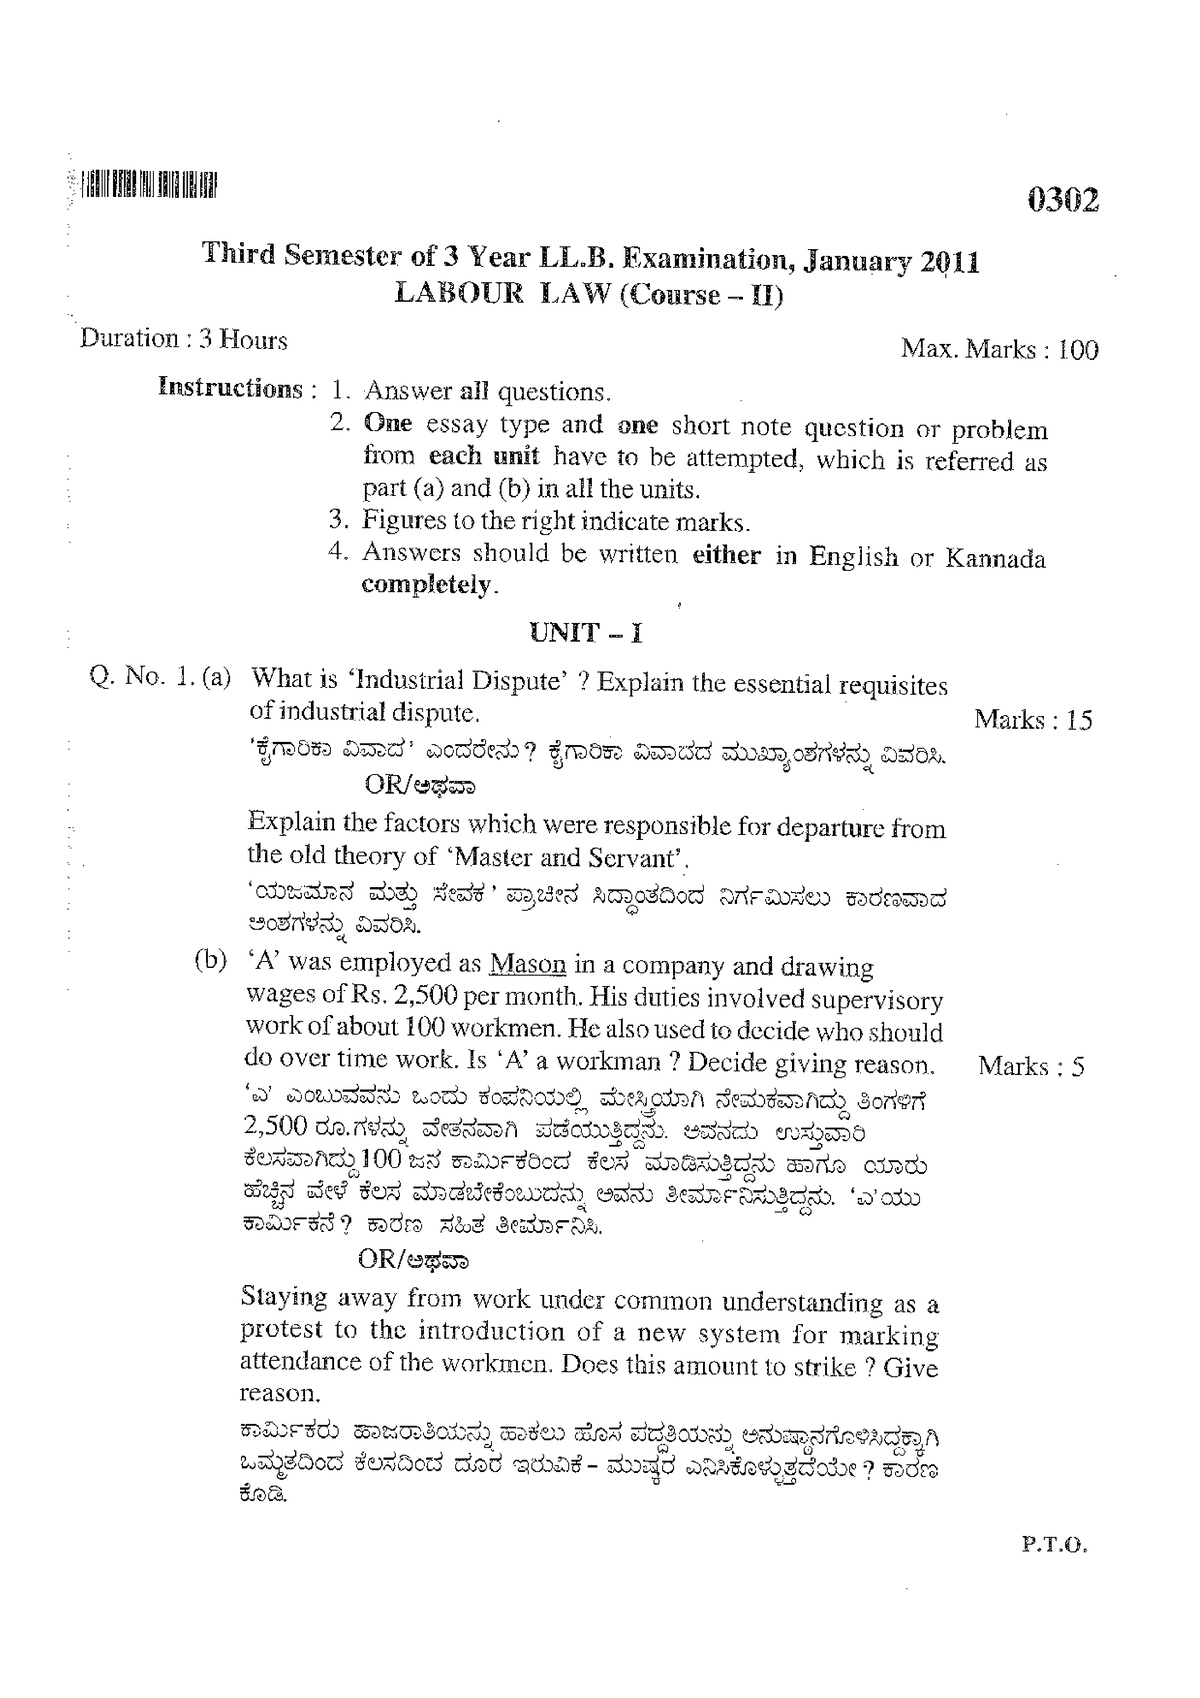 Labour Law Kslu Question Papers Bhqhpb Third Semester